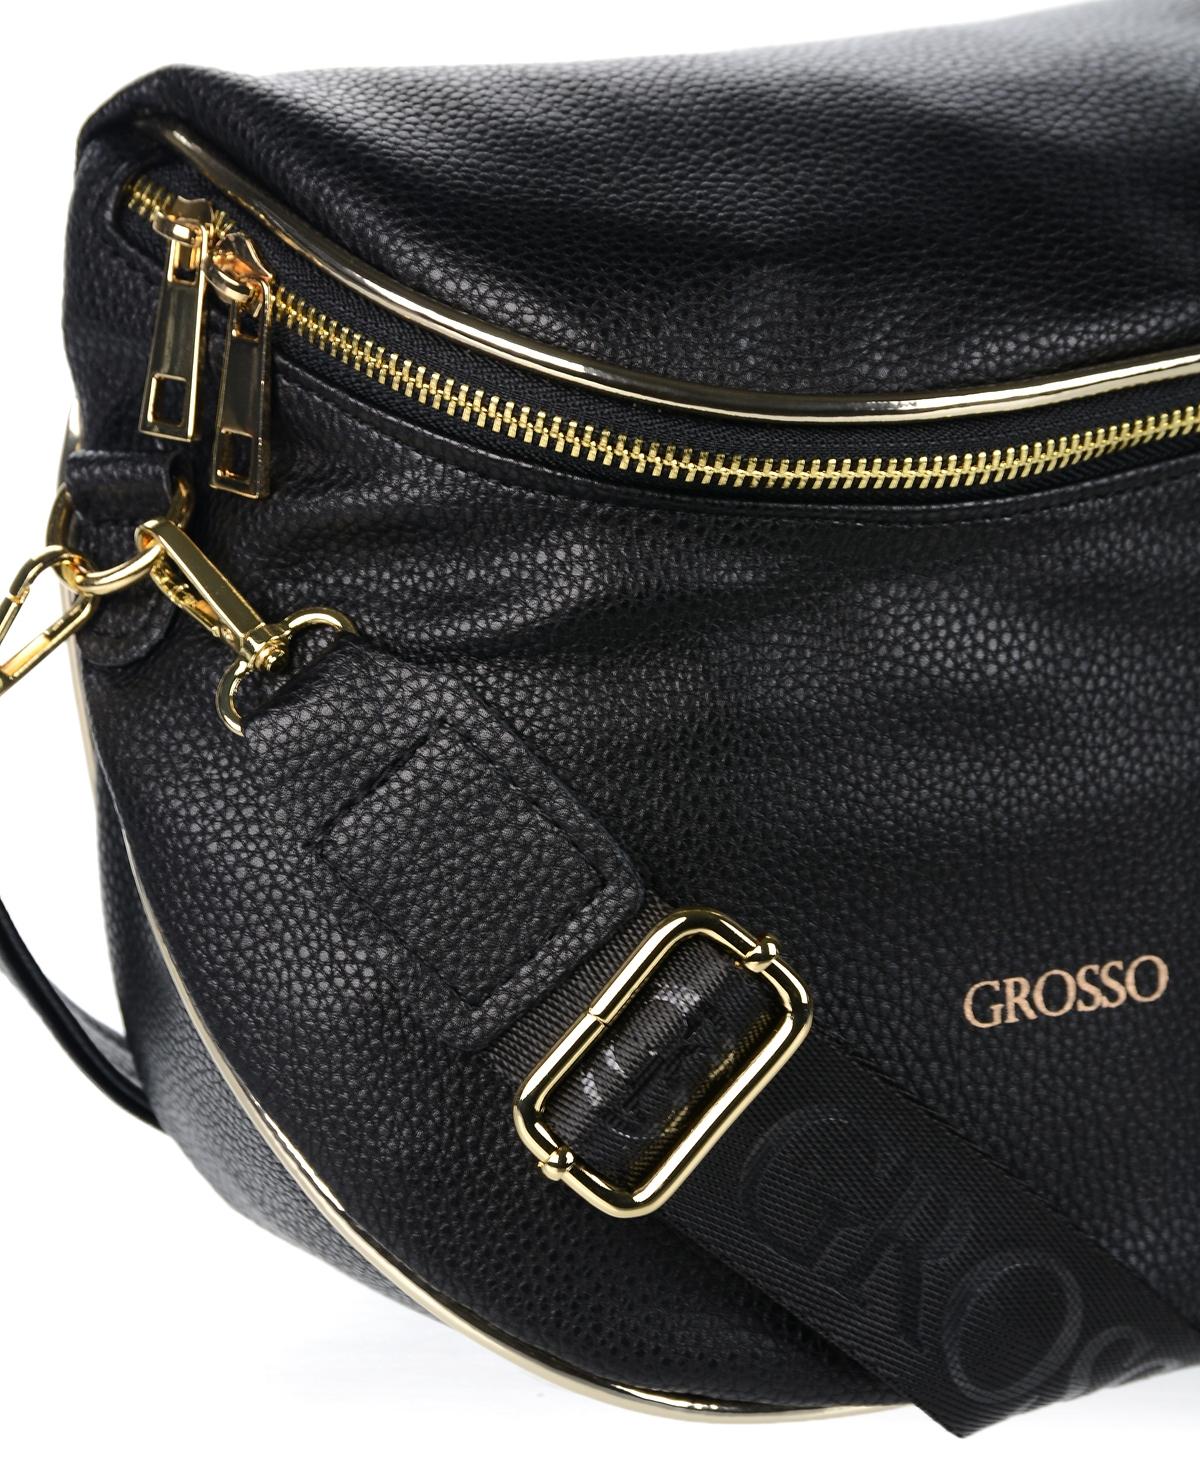 GROSSO čierna crossbody kabelka s nápisom Grosso PENY